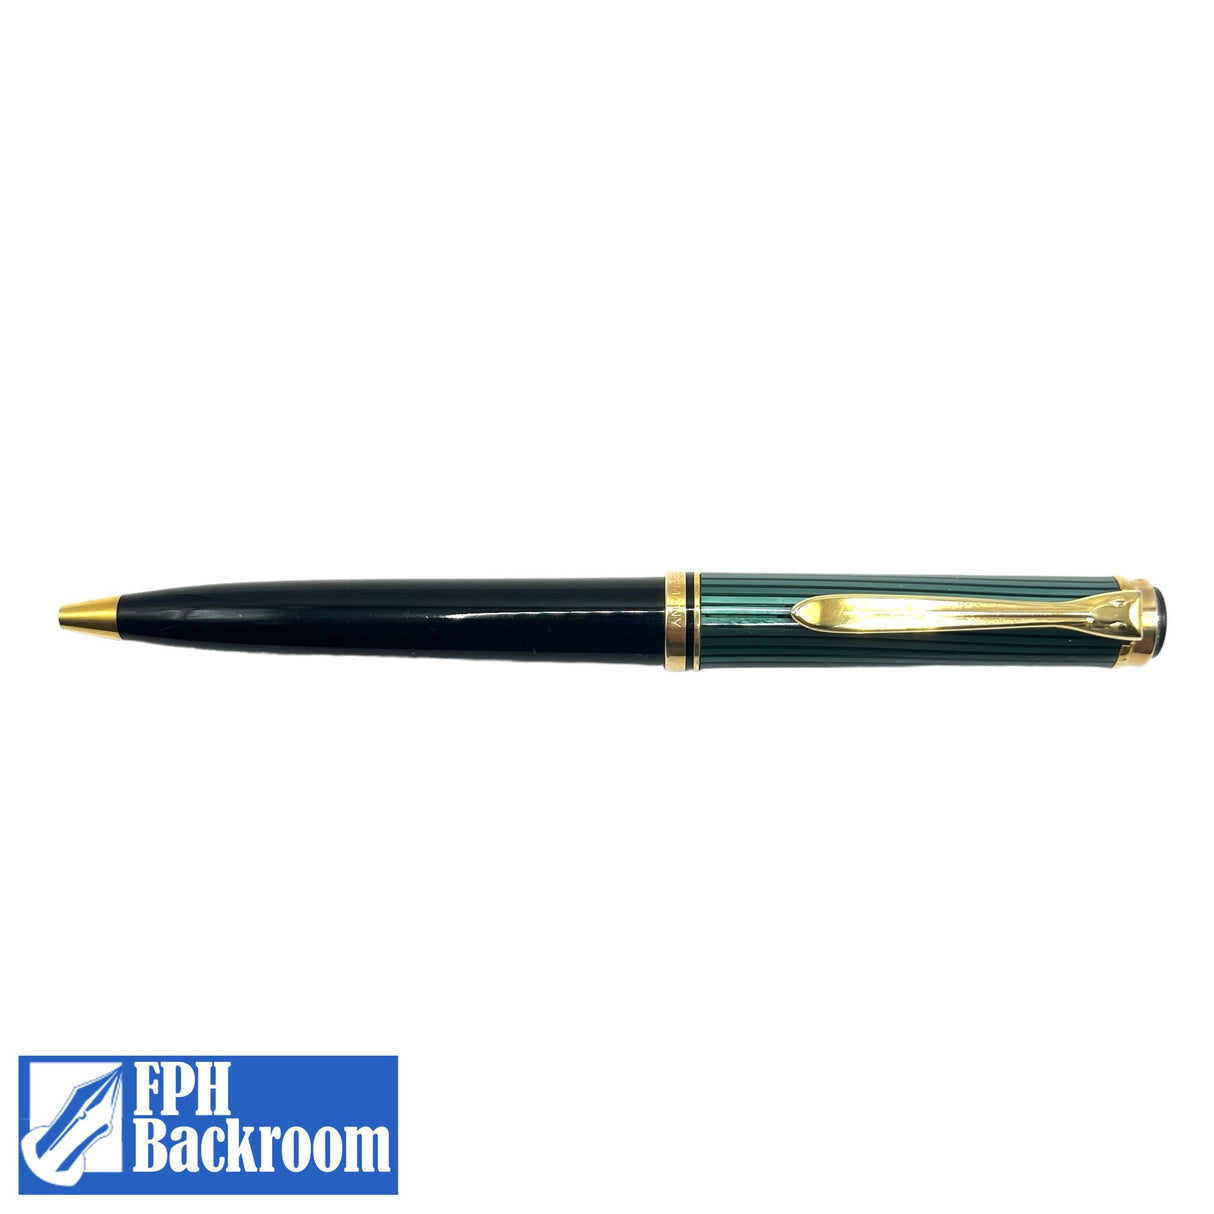 Pelikan K800 Ballpoint Pen - First Generation